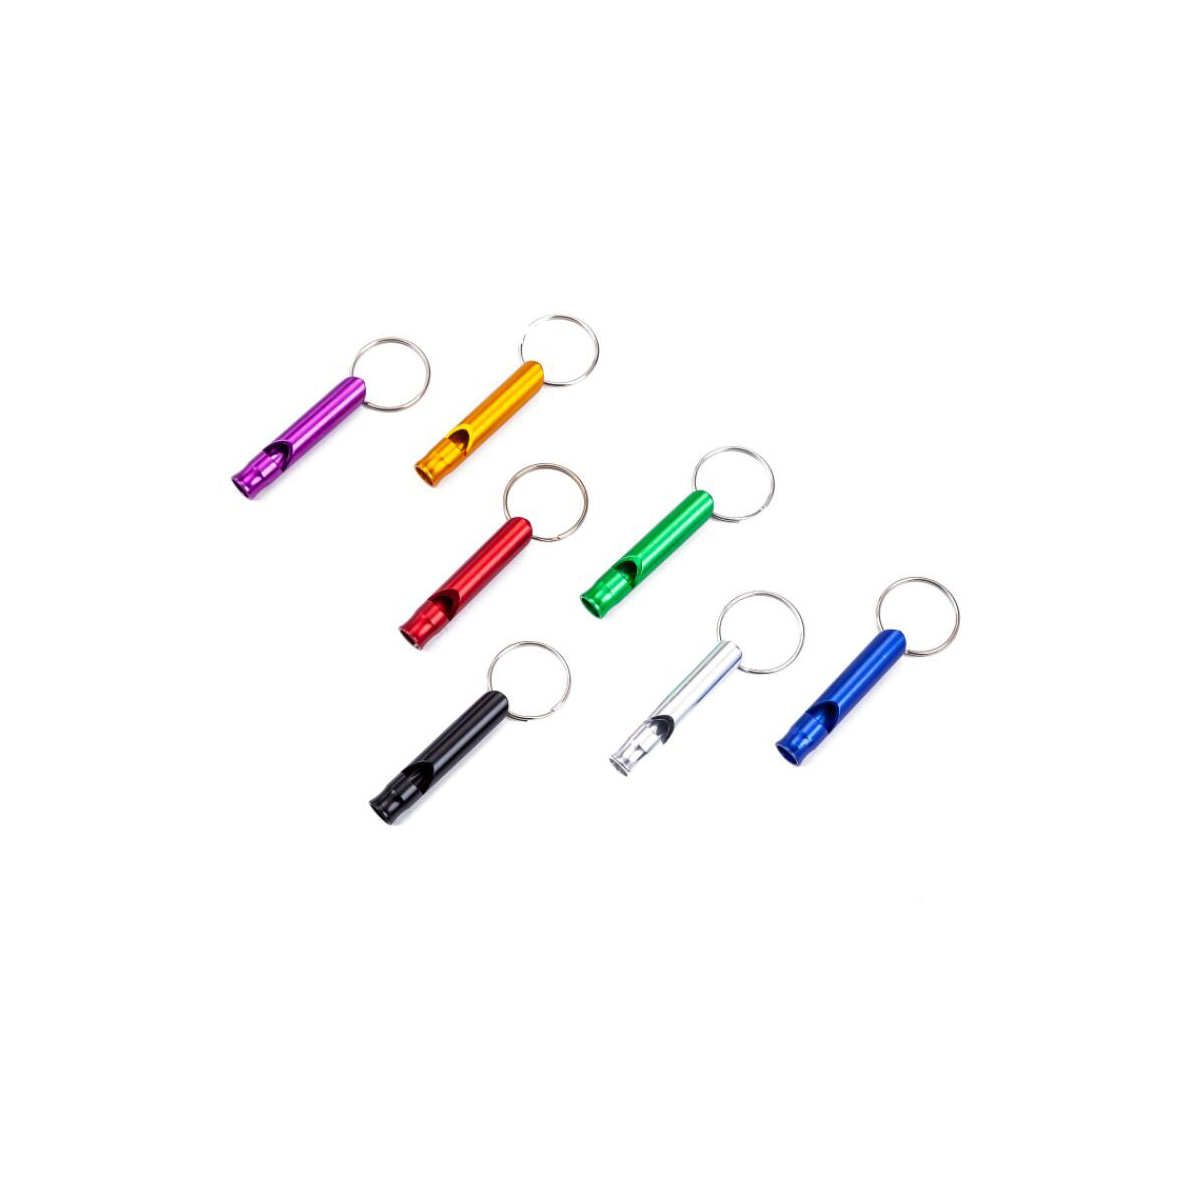 Colorful Aluminum Whistle Keychain